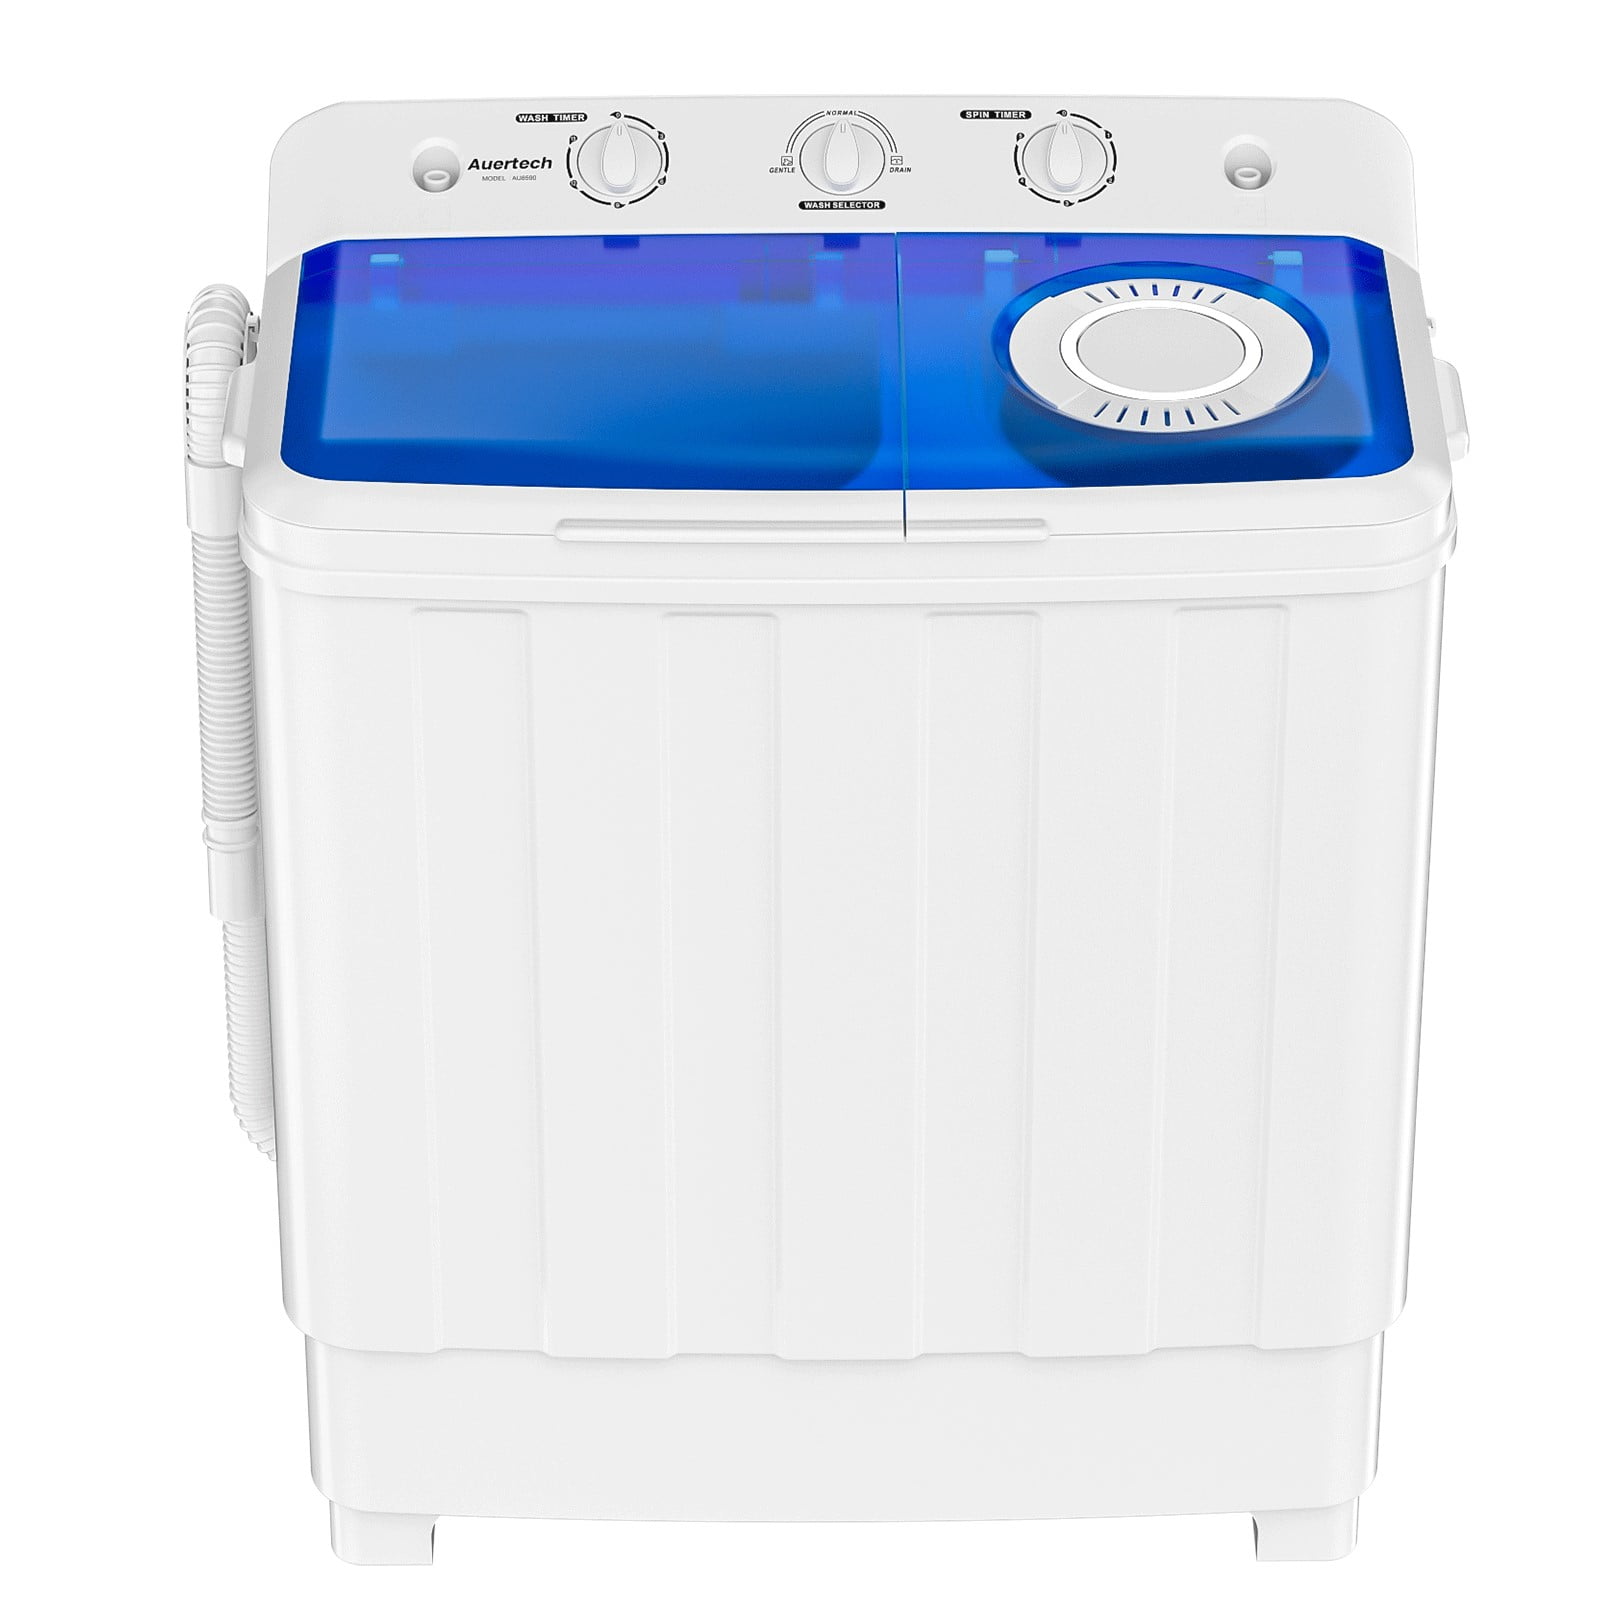 SUPER DEAL Compact Mini Twin Tub Washing Machine, Portable Laundry